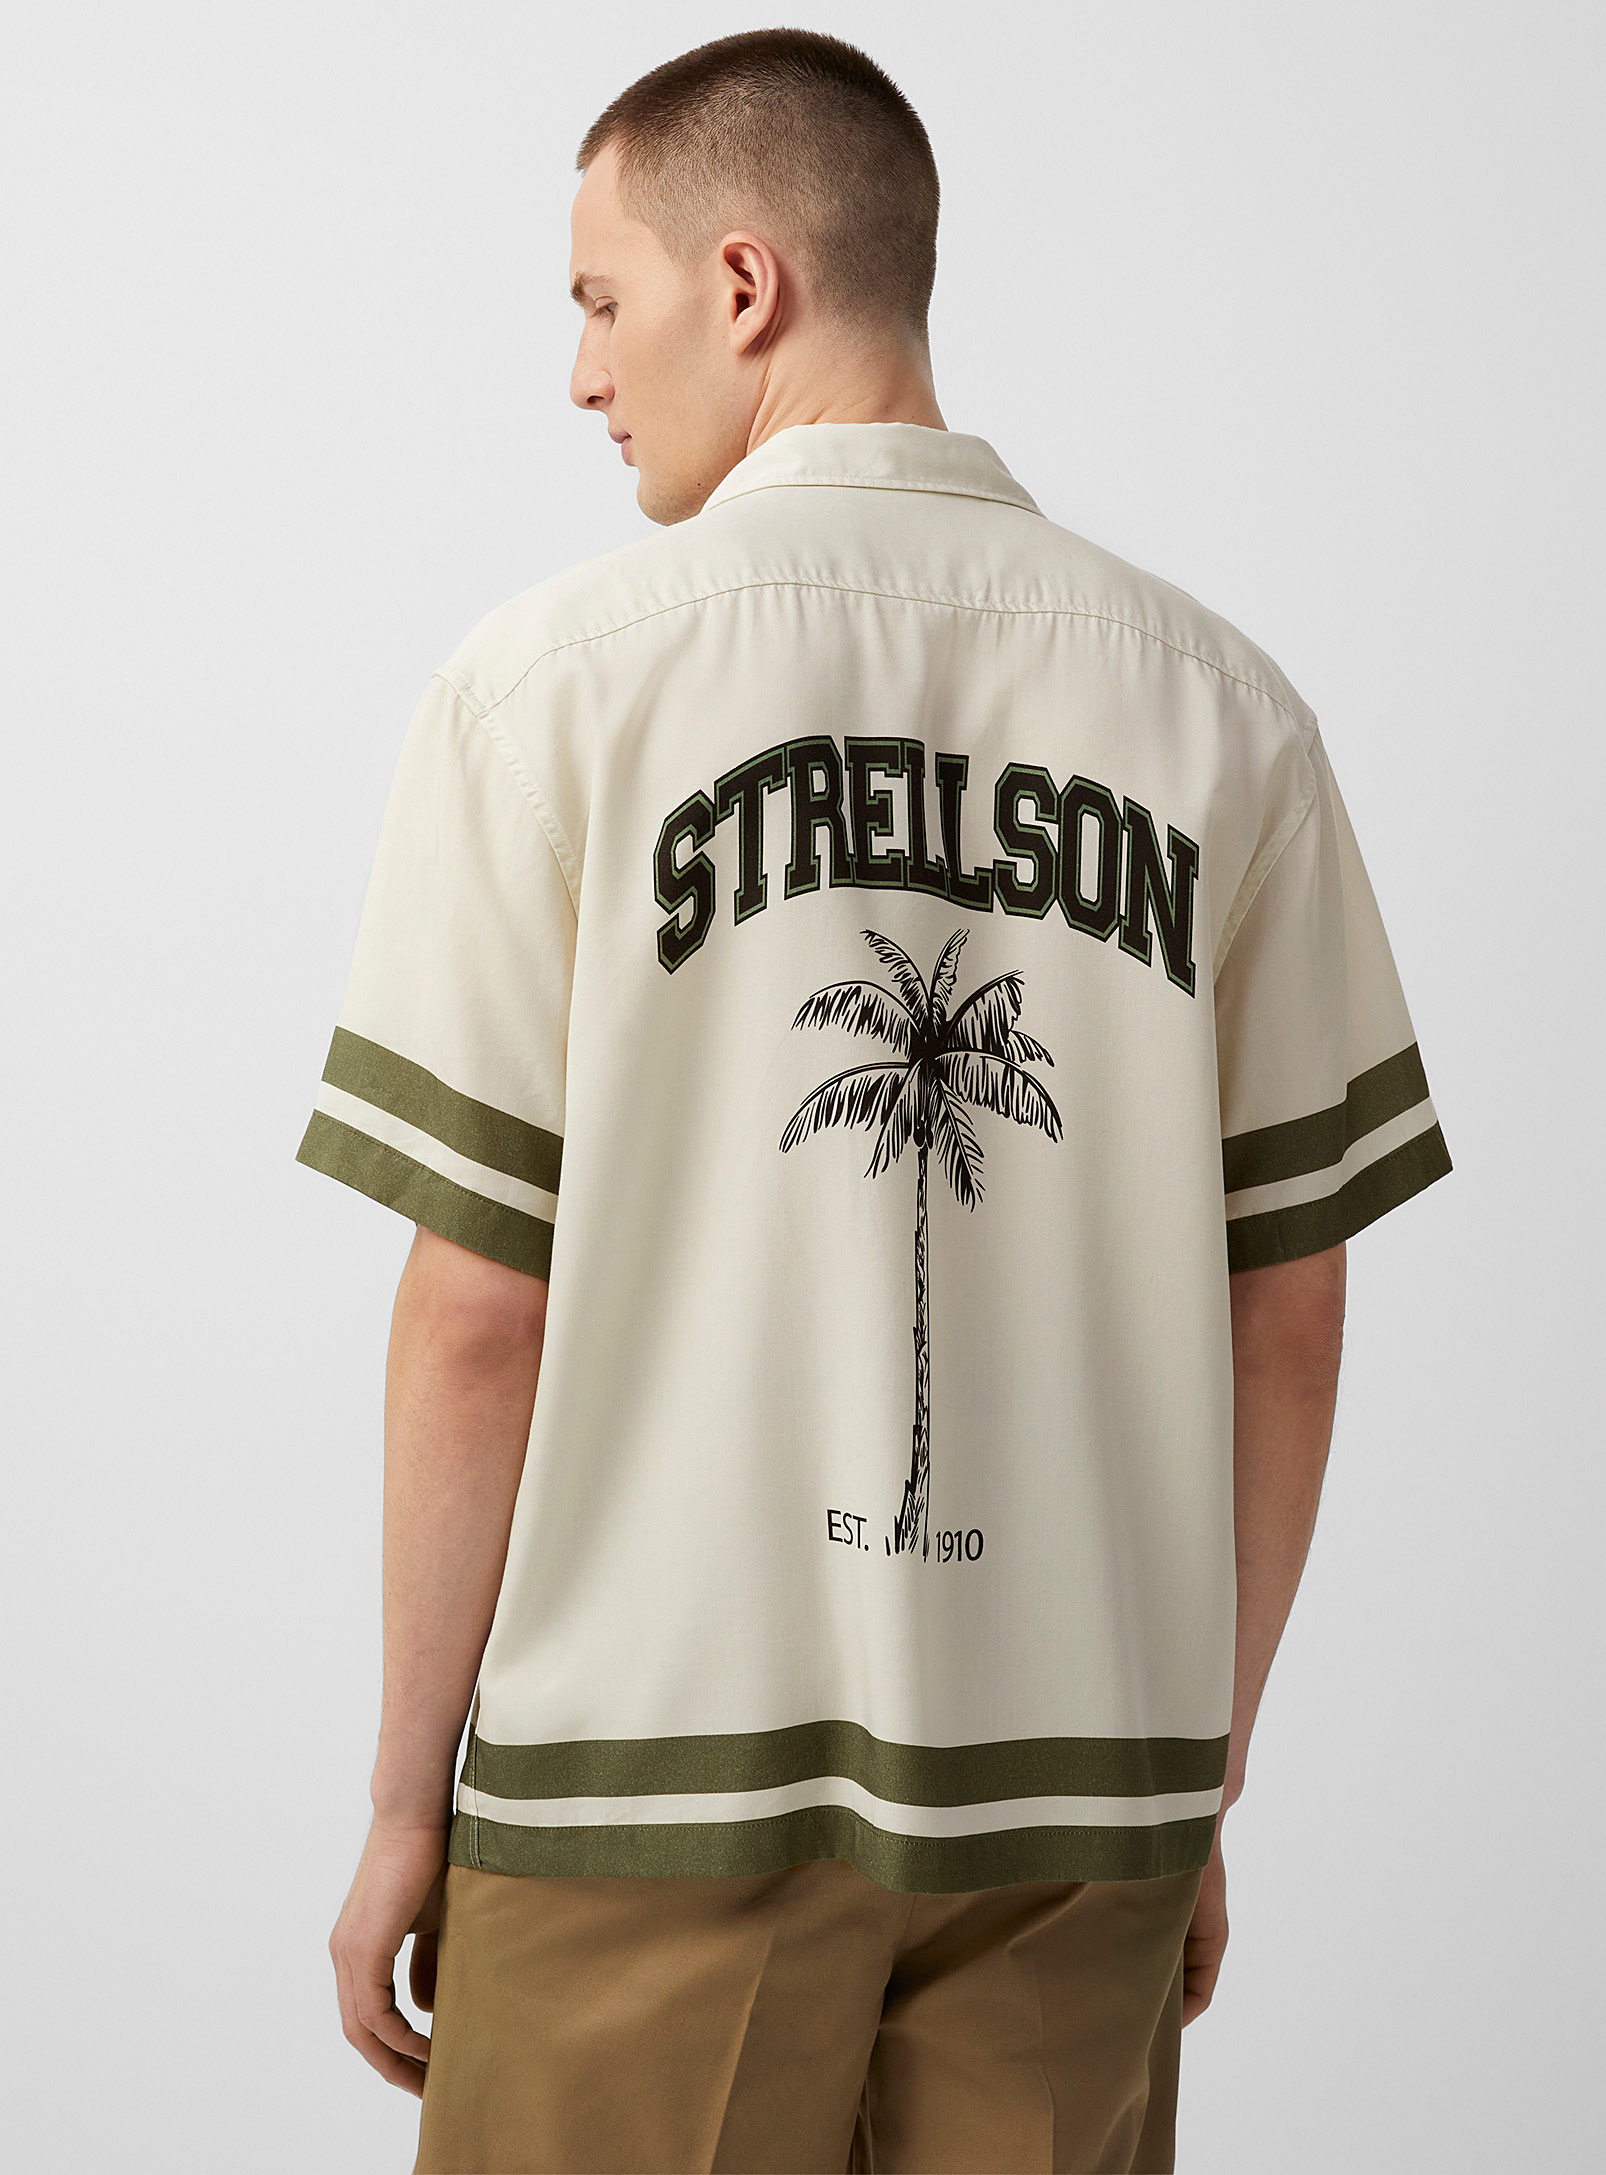 Strellson - Men's Palm Springs camp shirt